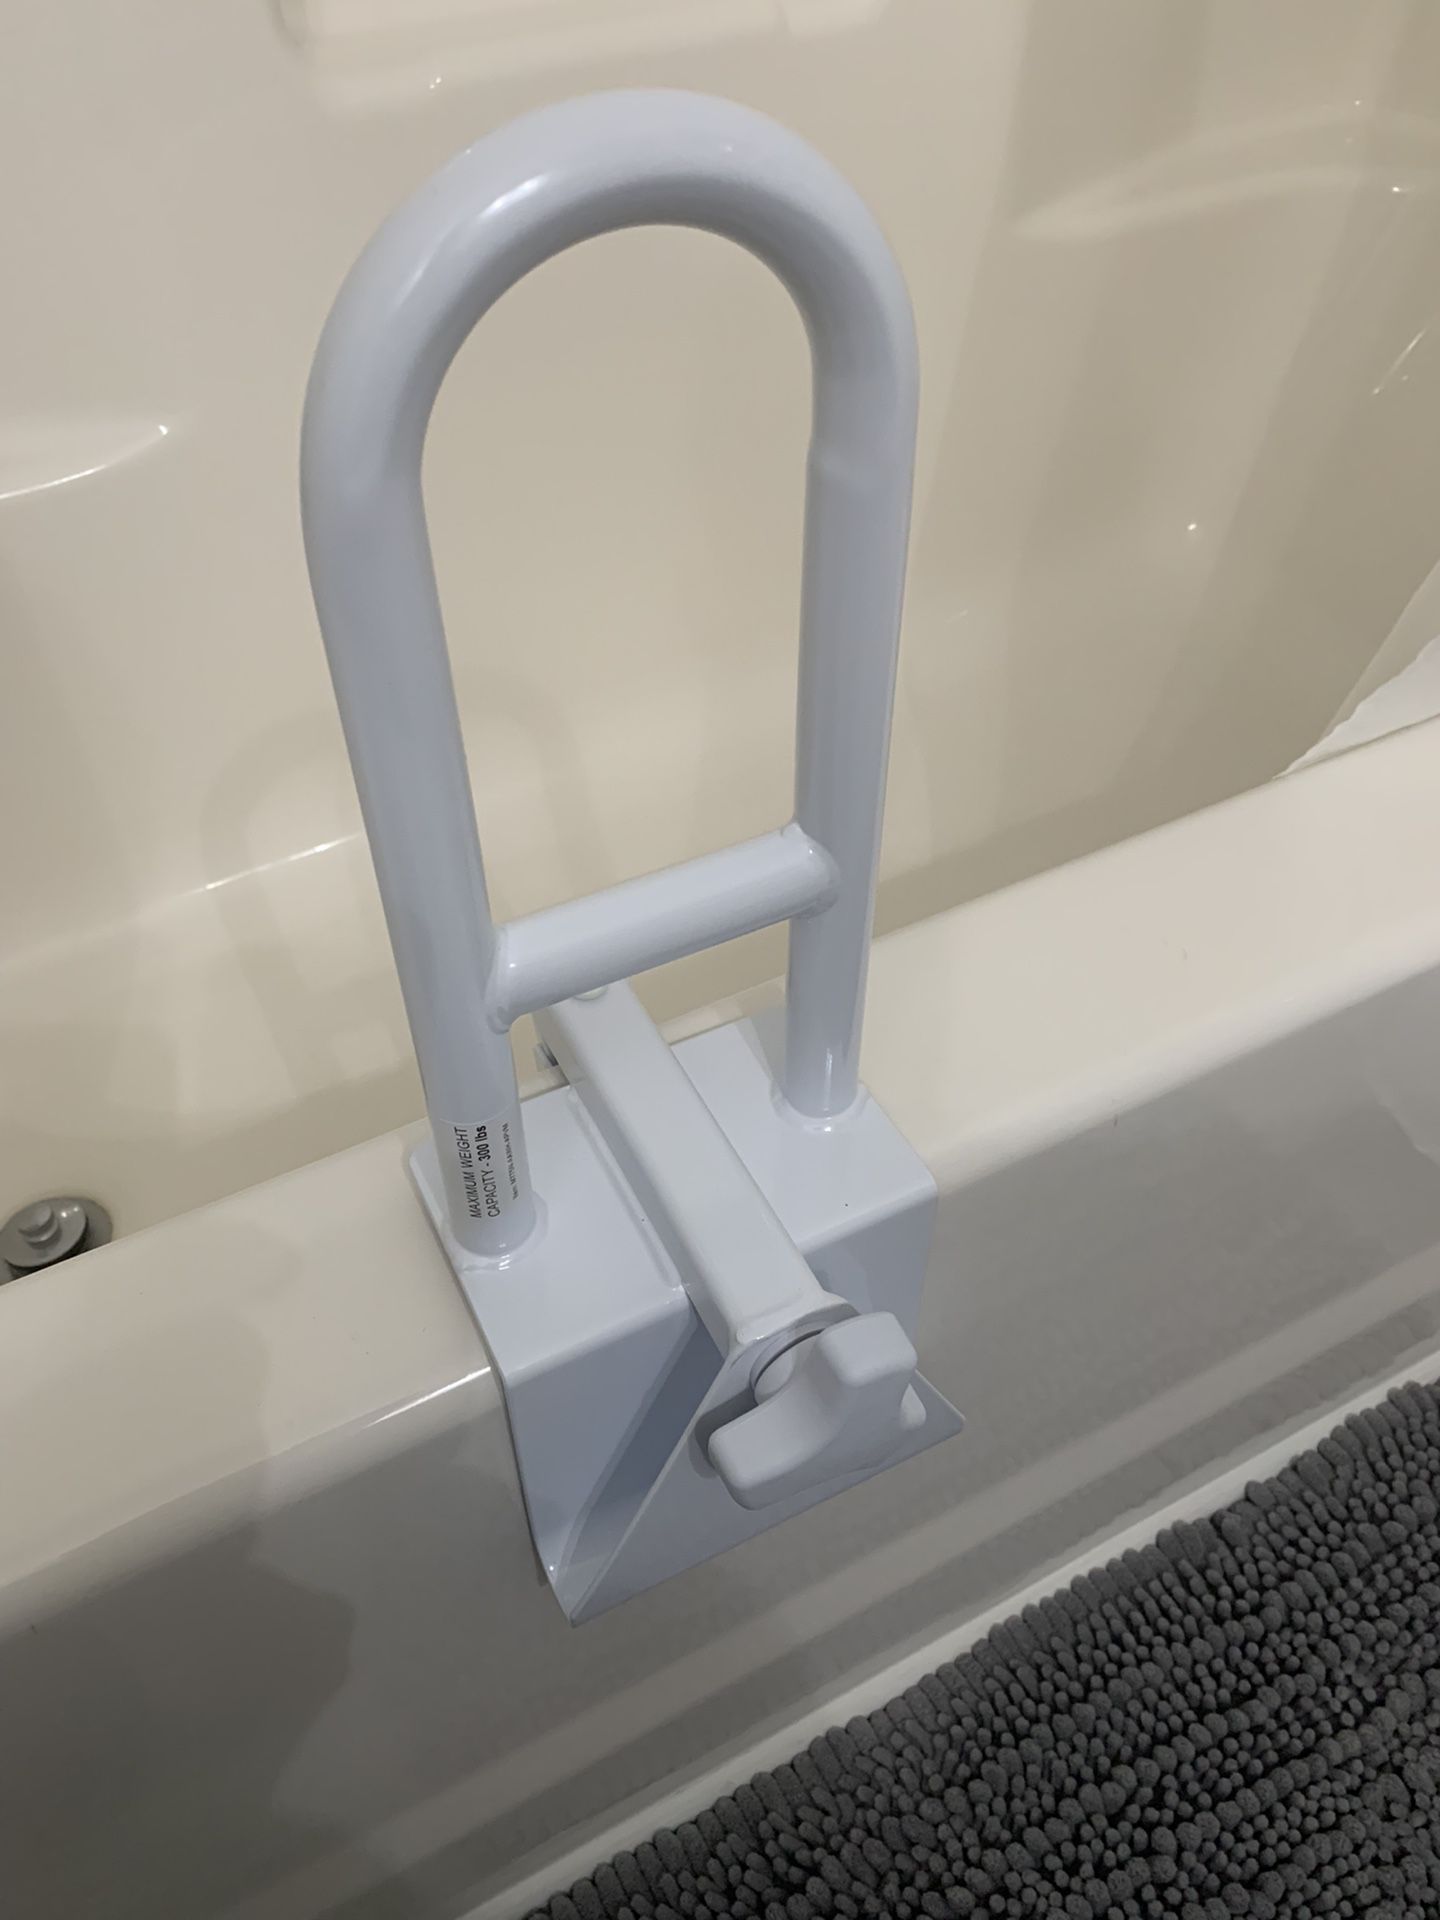 Bathtub Safety Handrail / Vauun Medical - New!